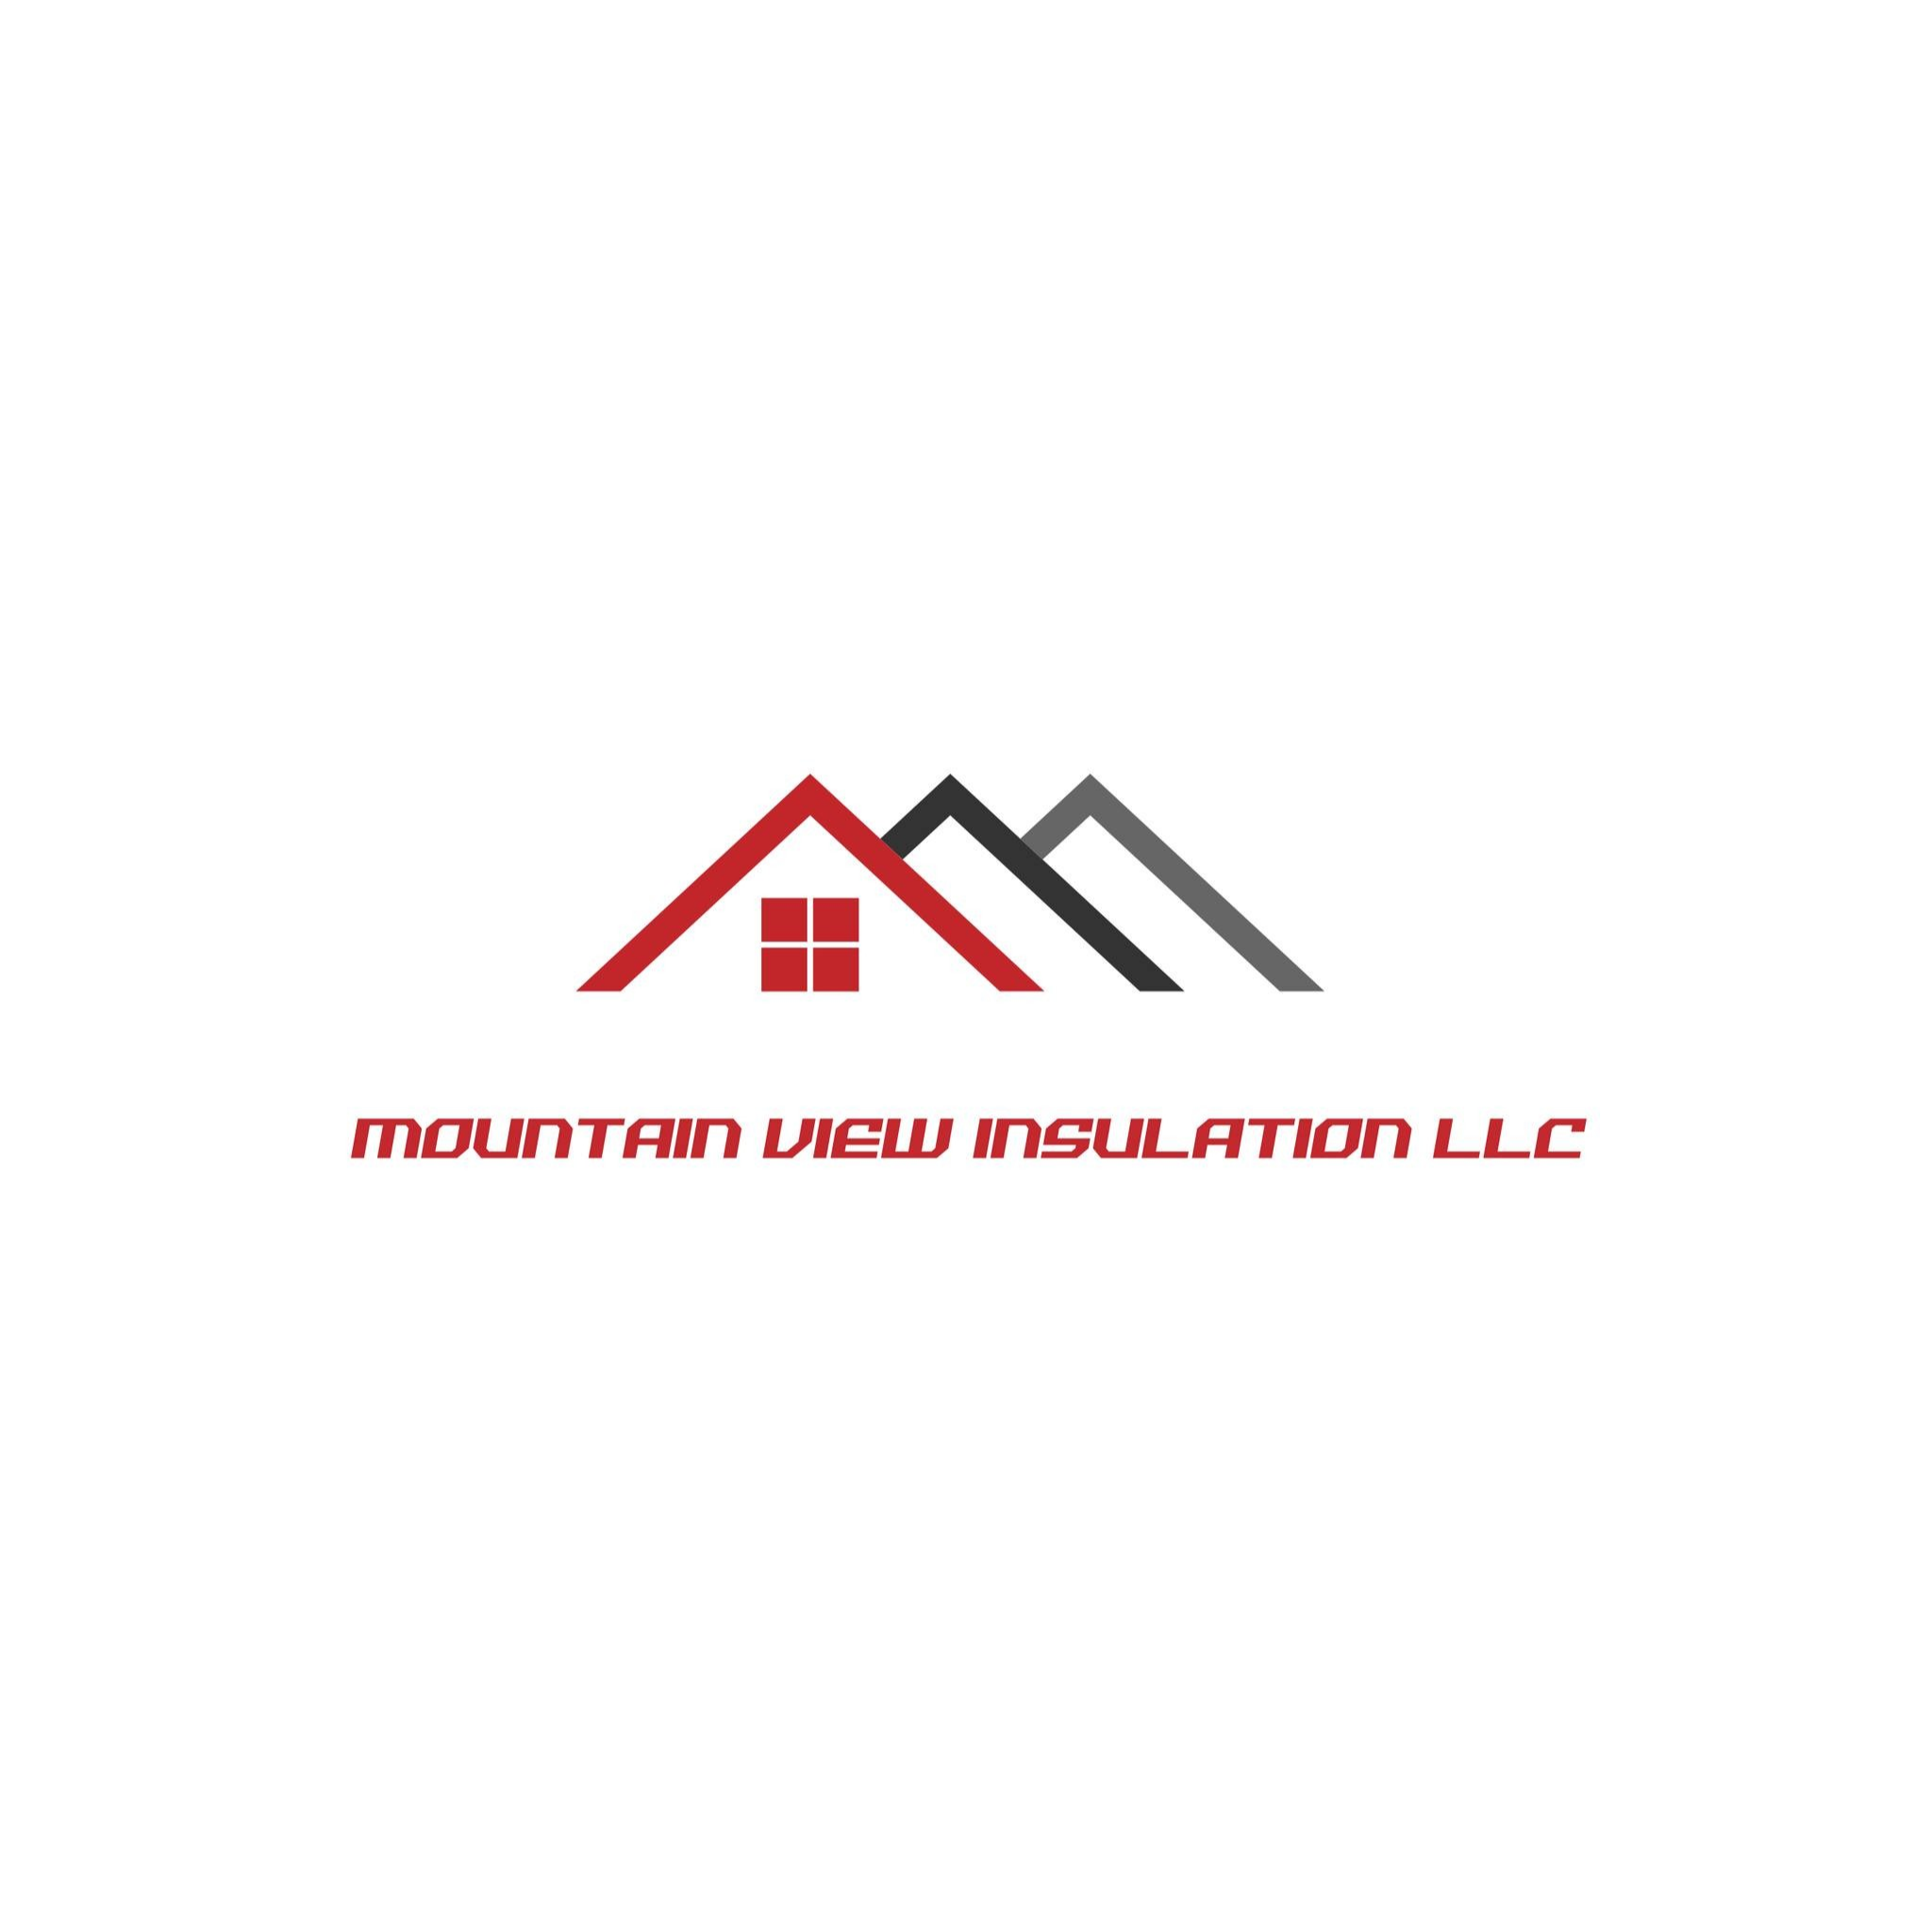 Mountain View Insulation LLC